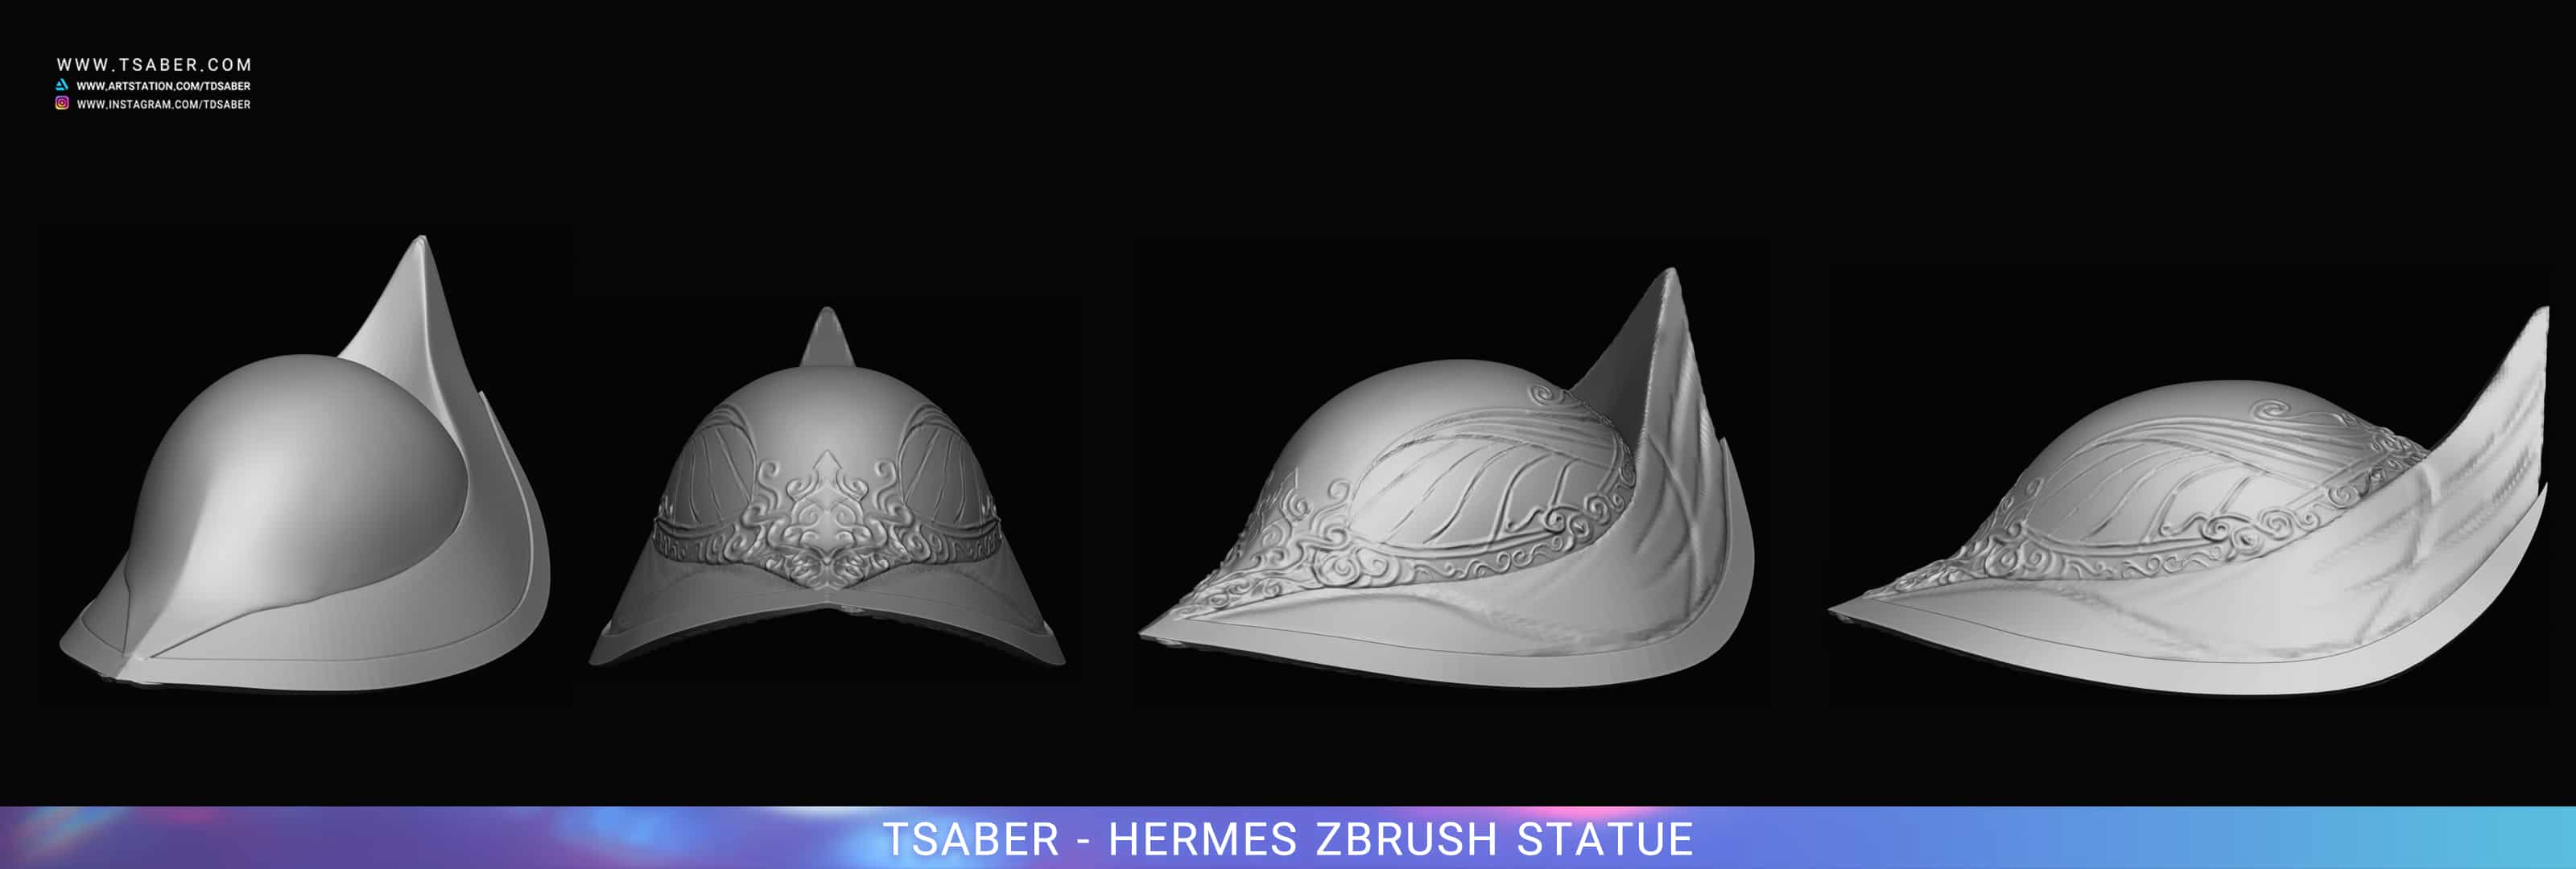 Making of Hermes Statue Zbrush - Blood of Zeus - Tsaber